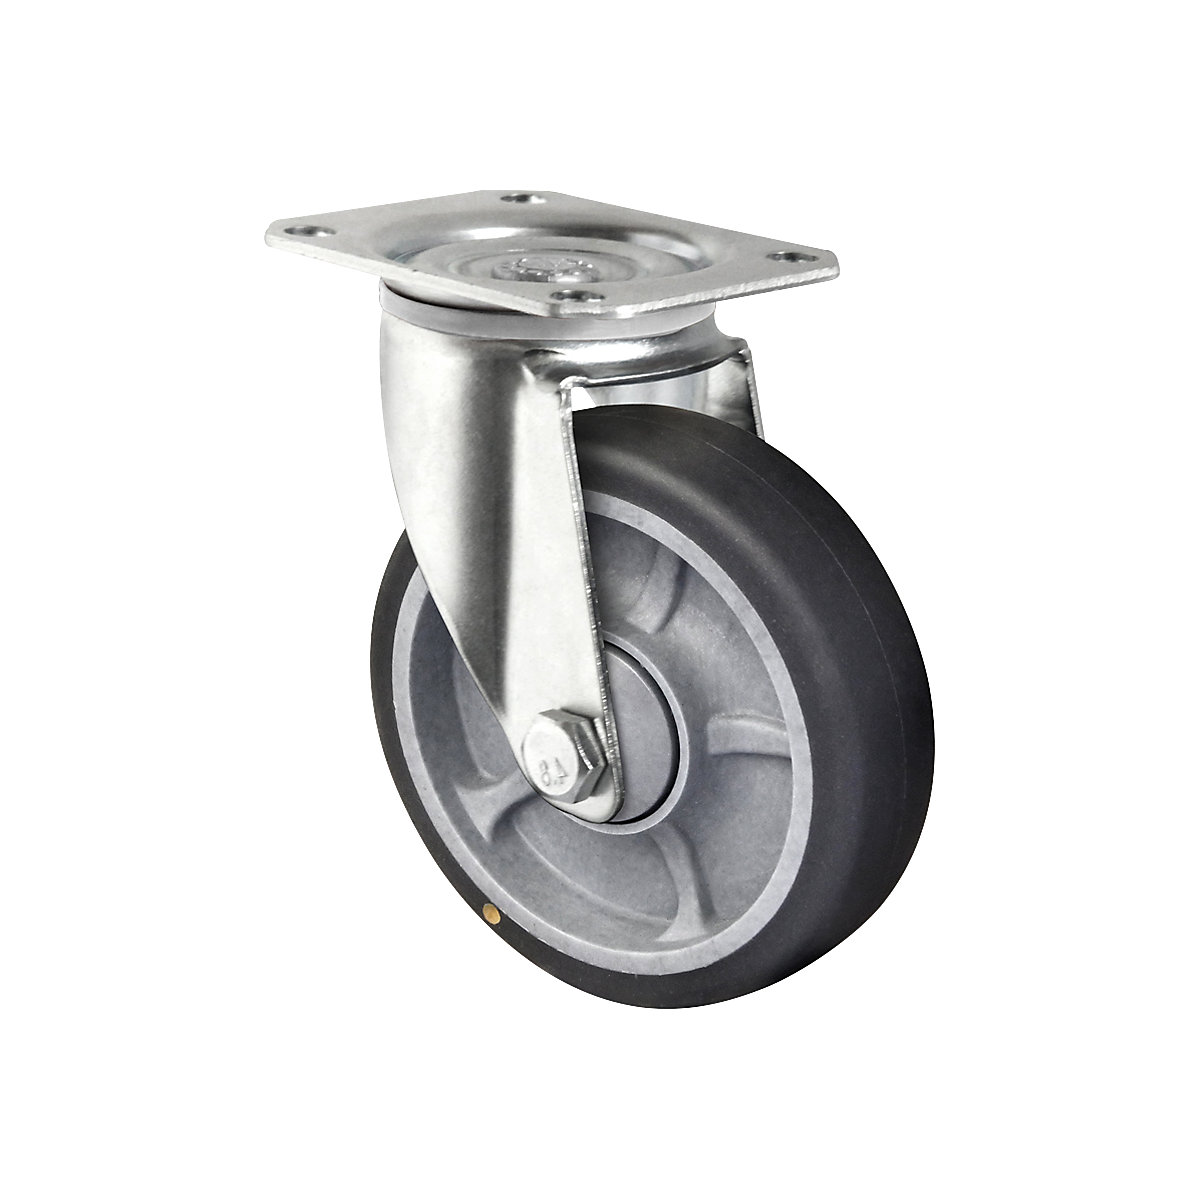 EUROKRAFTbasic – TPE tyres on PP rim, ESD, 2+ items, wheel Ø x width 160 x 40 mm, swivel castor